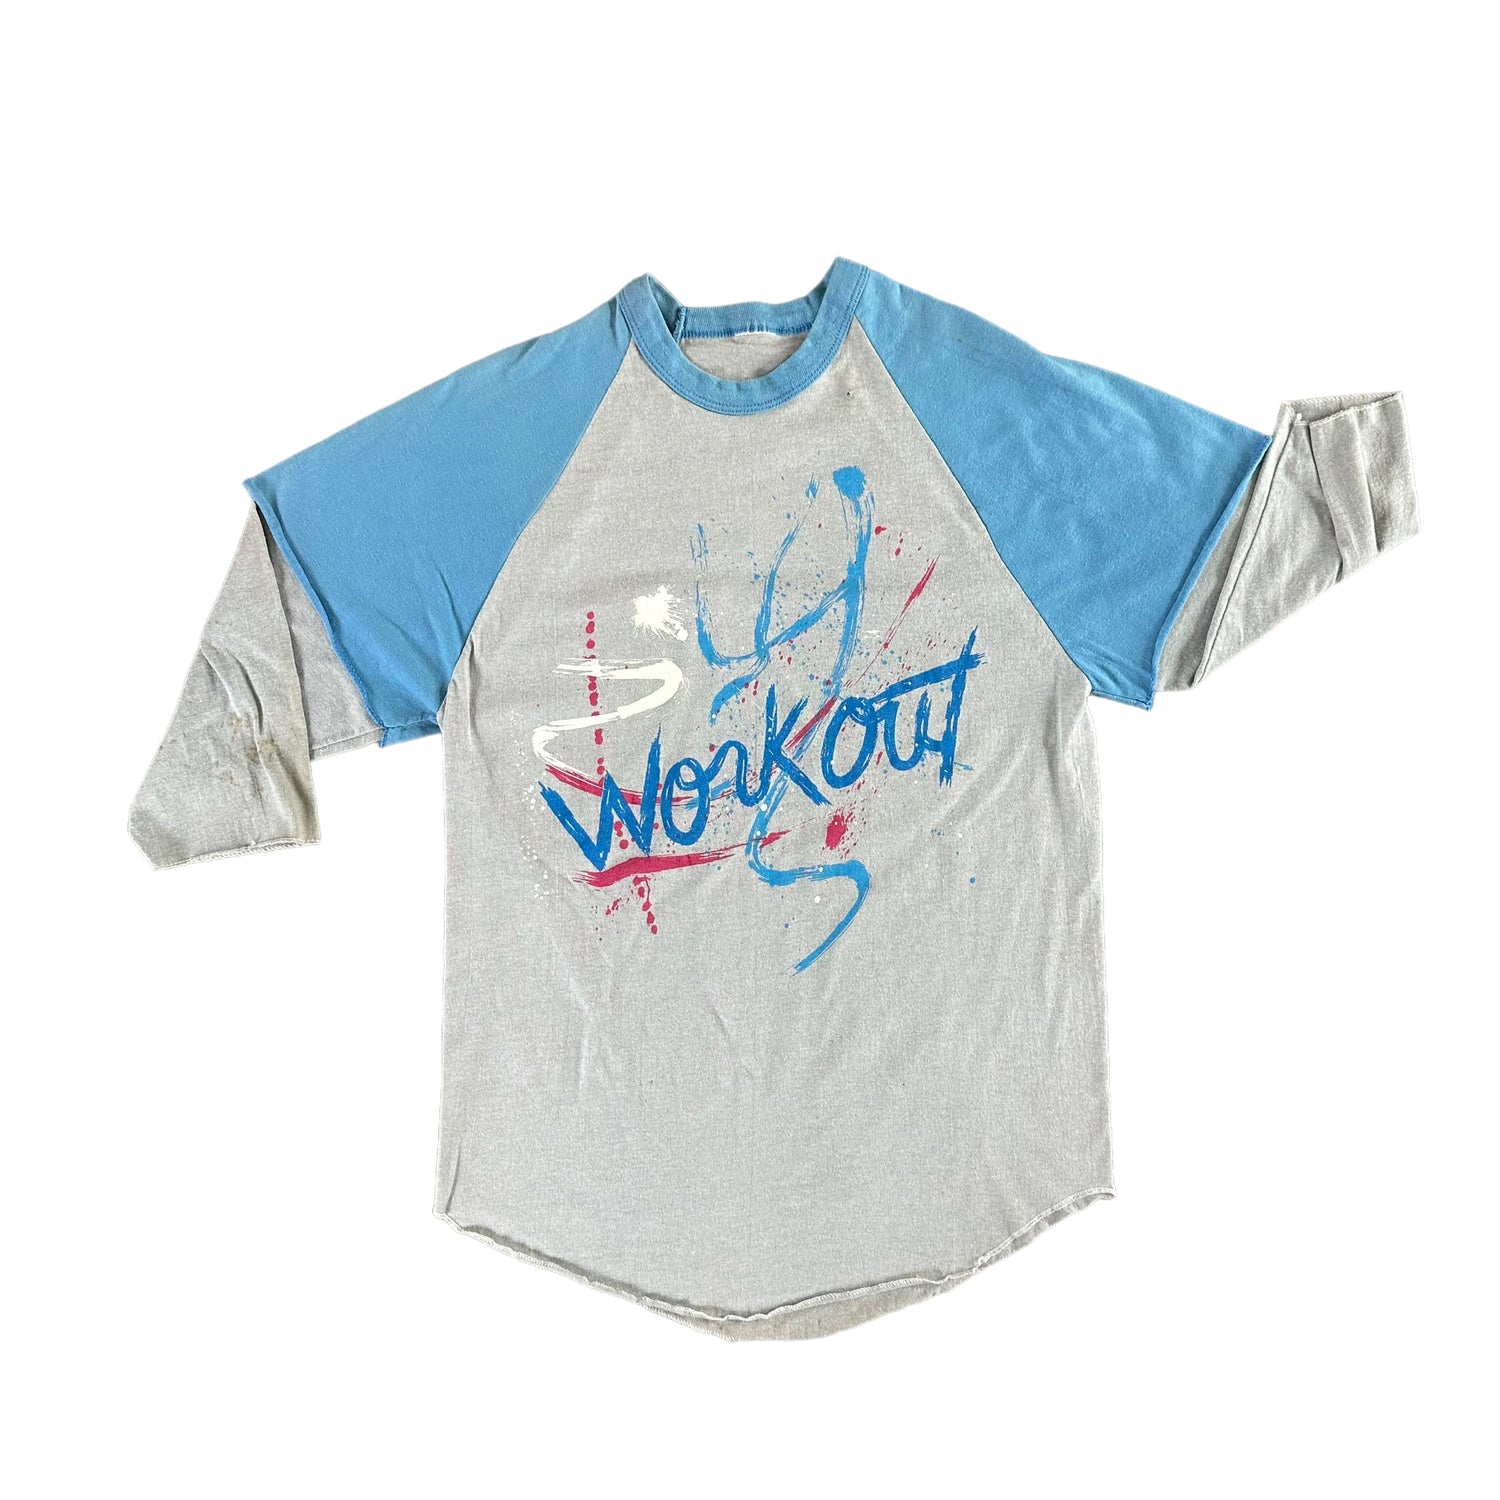 Vintage 1980s Workout T-shirt size Medium